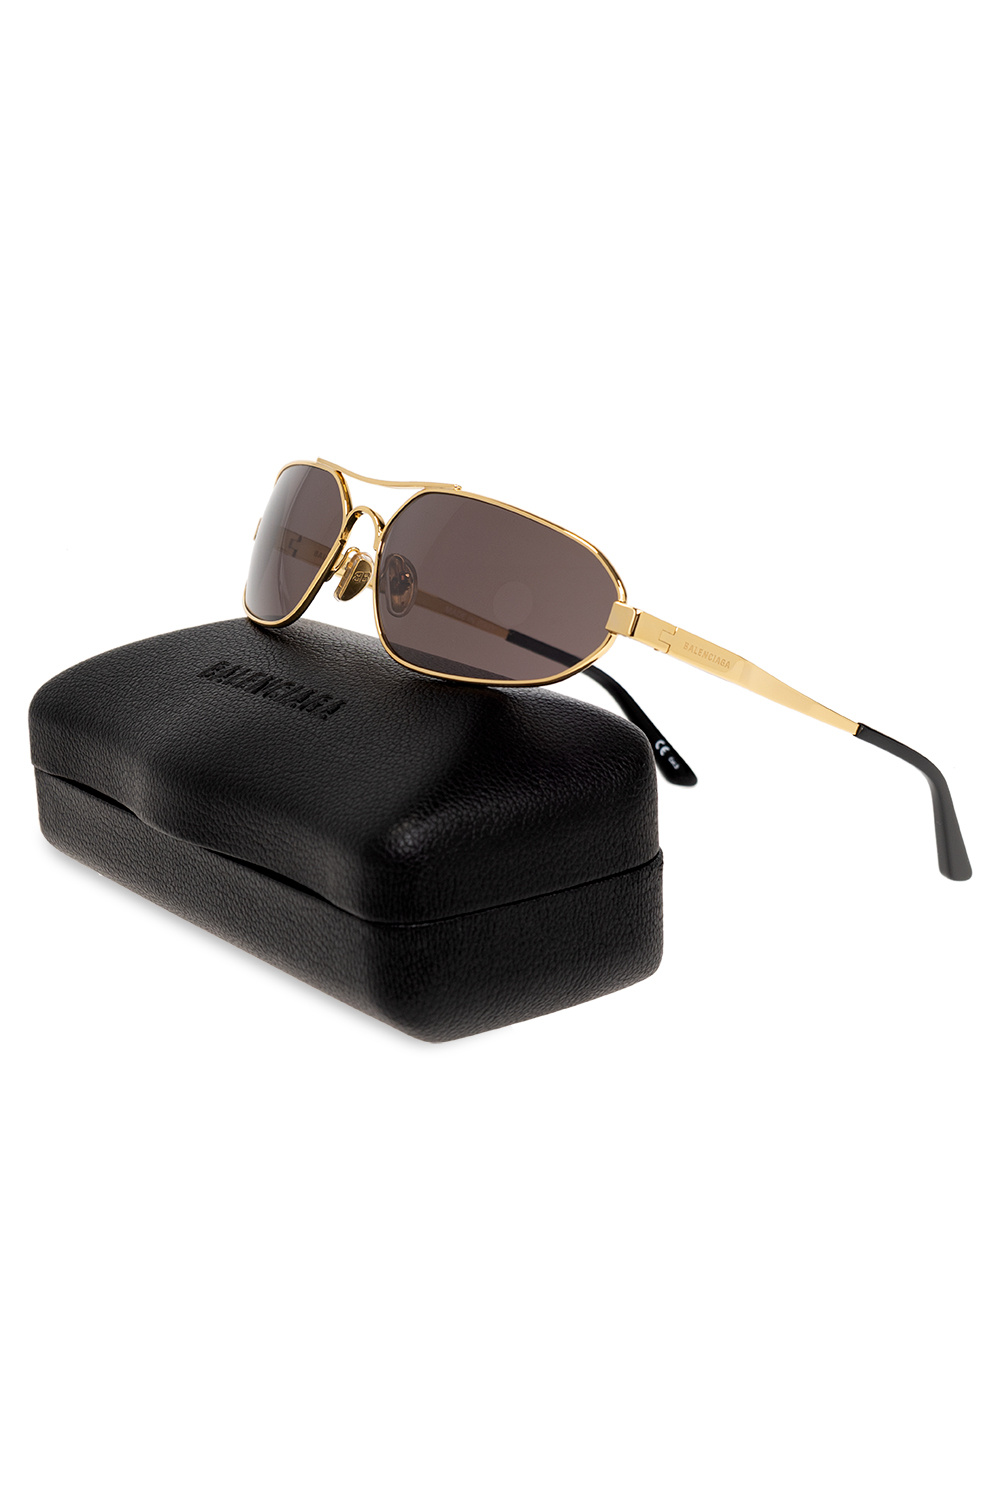 Gold 'Stretch Oval' sunglasses Balenciaga - Vitkac France